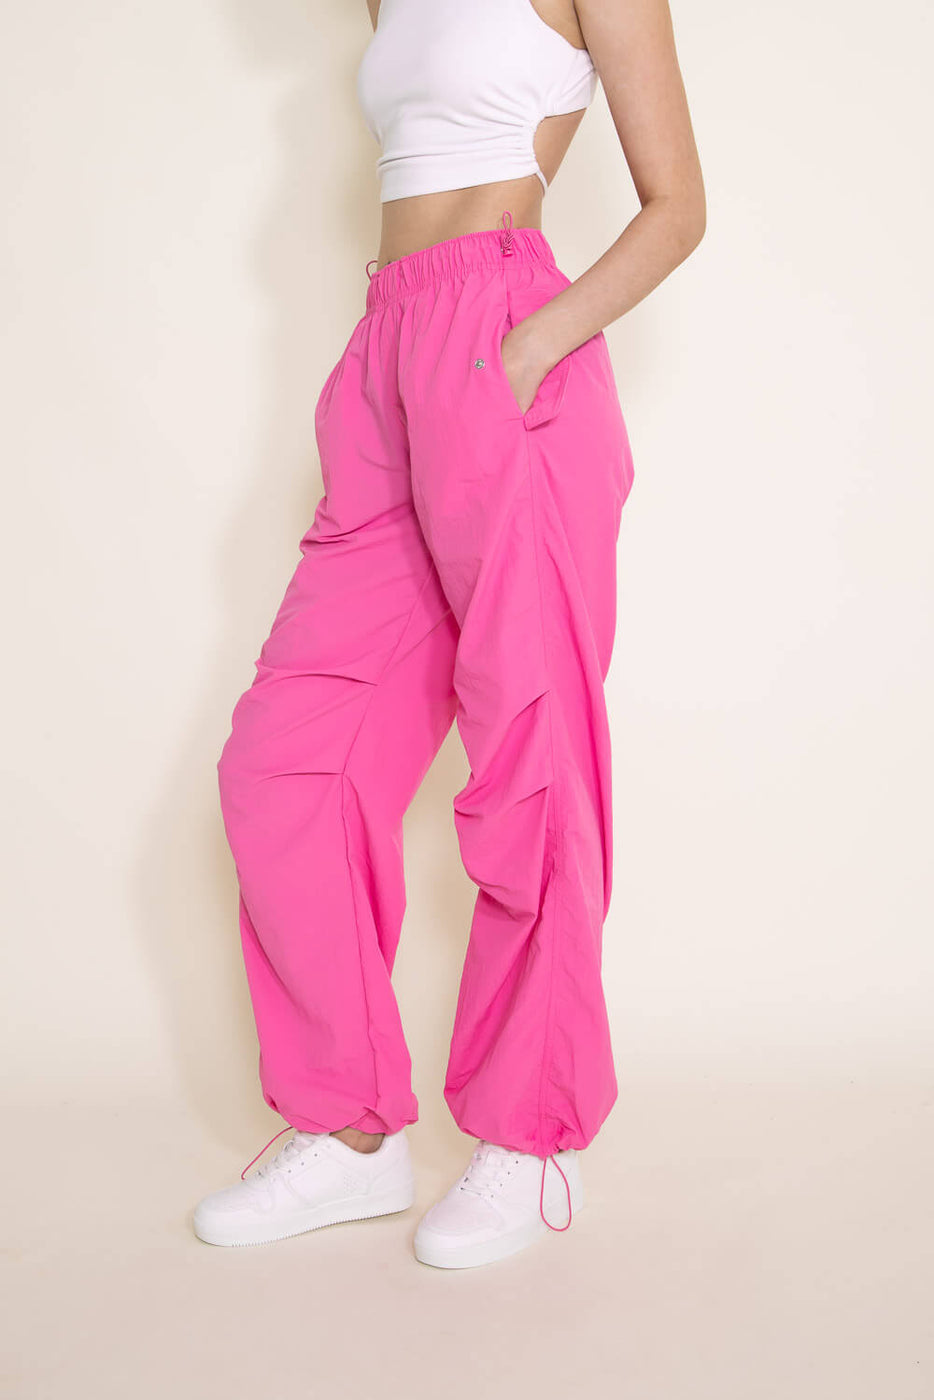 Hot Pink parachute pants 💖